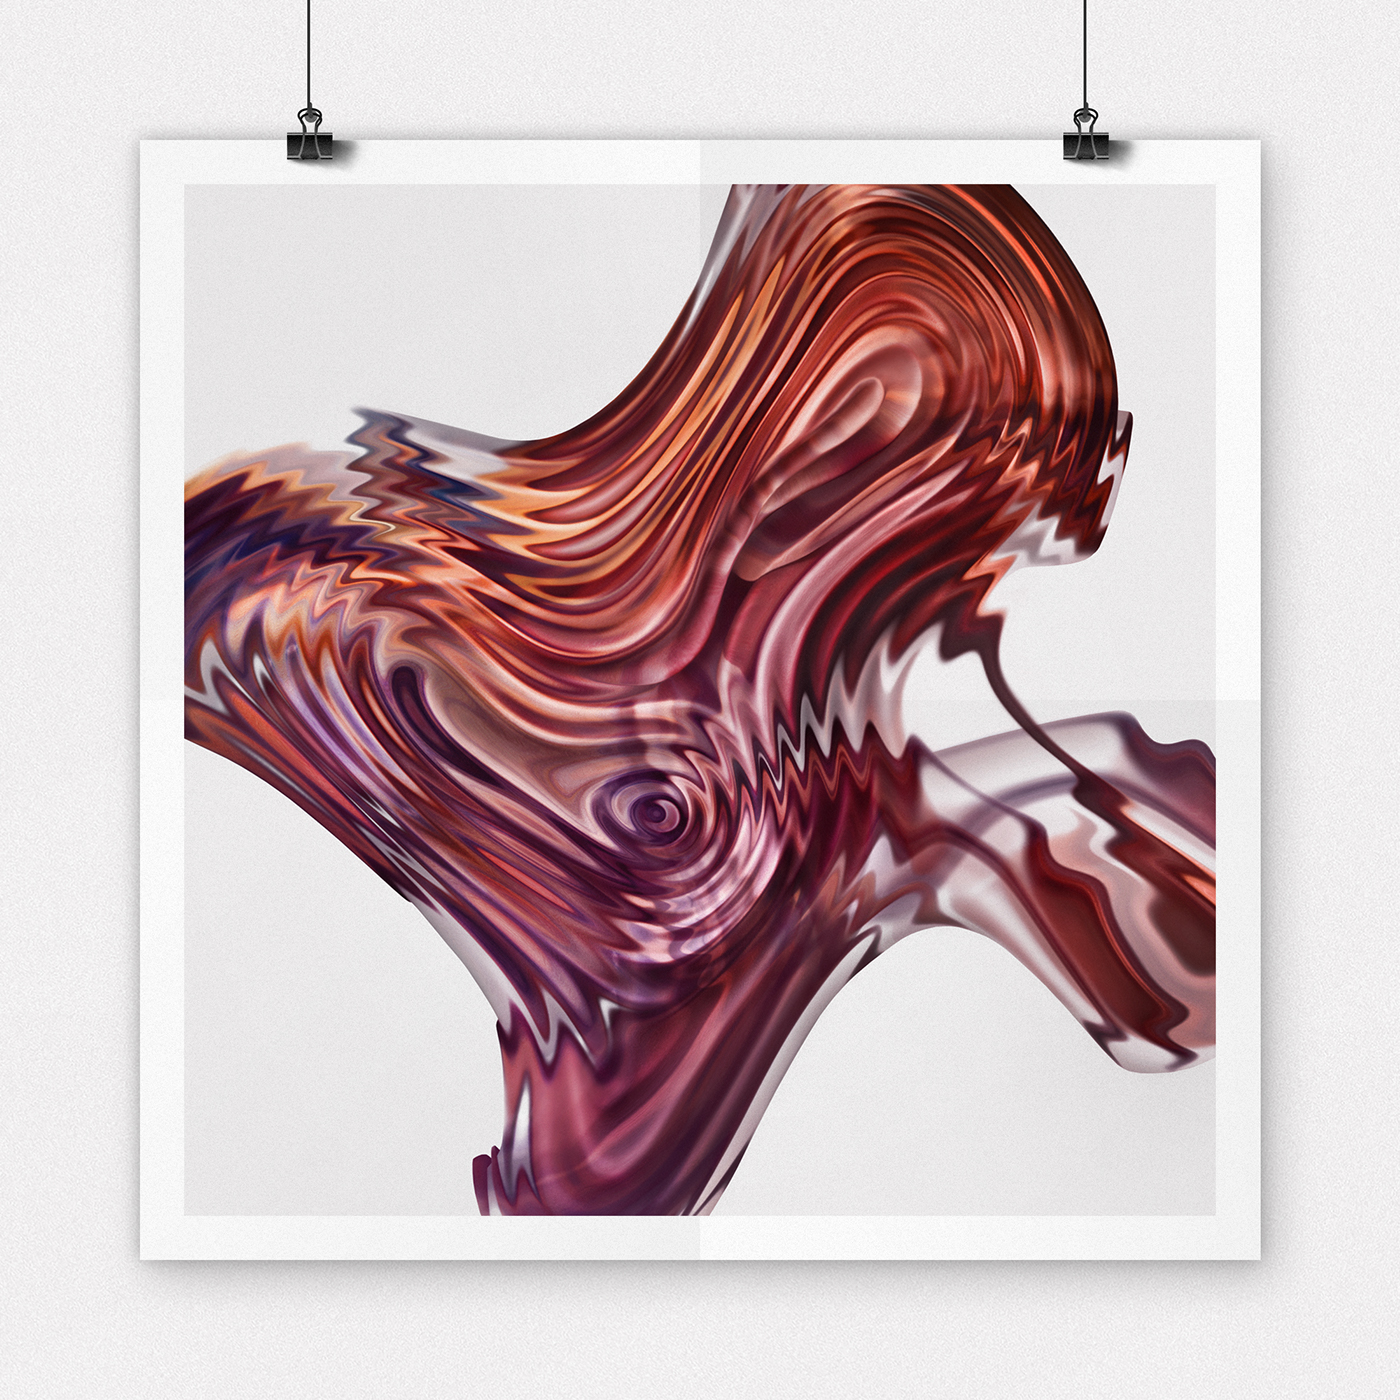 cover print music vunyl poster design 3D texture colors mock up